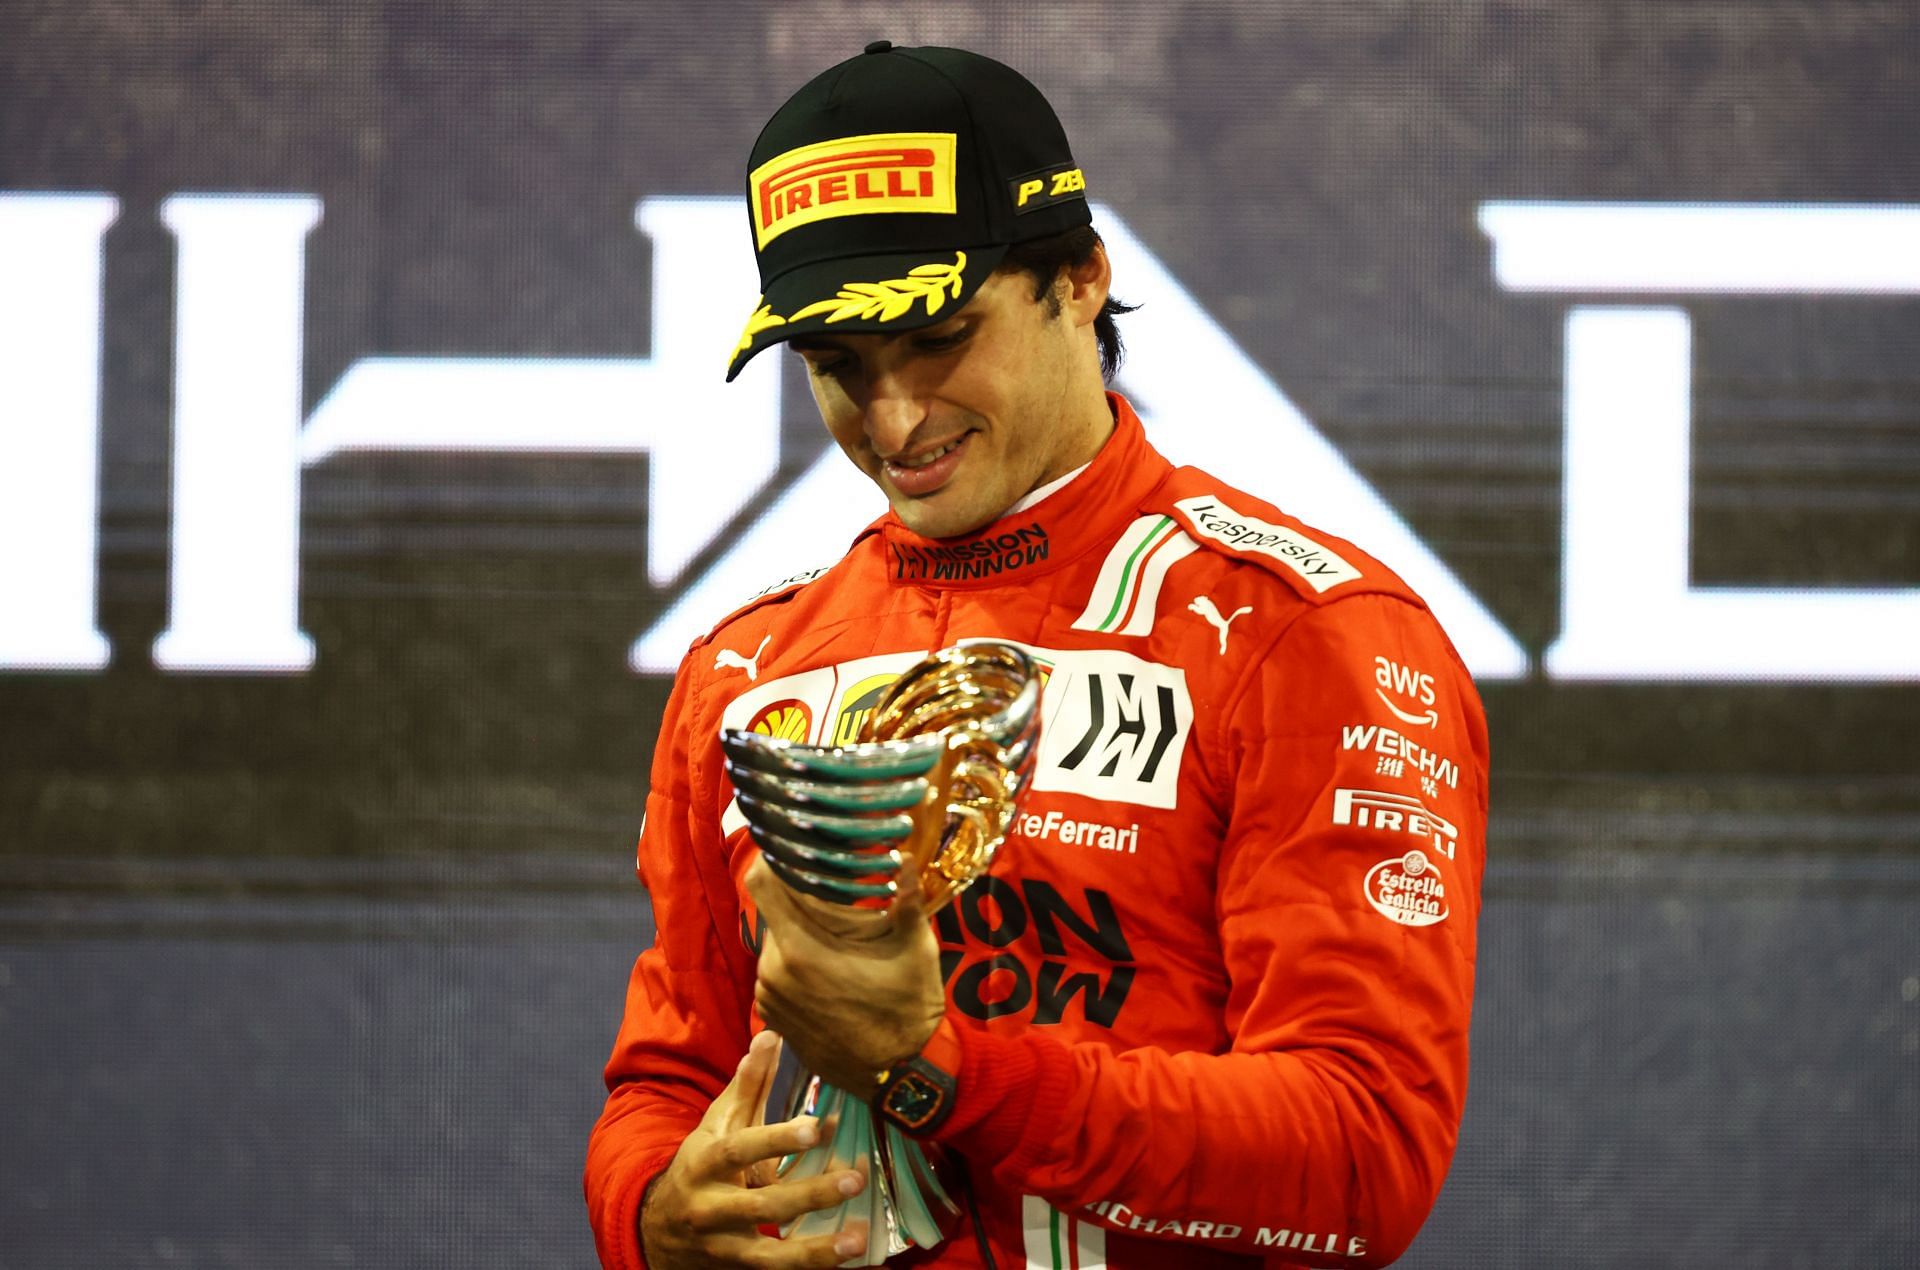 Carlos Sainz secured his fourth podium finish for Ferrari at the 2021 Abu Dhabi Grand Prix.